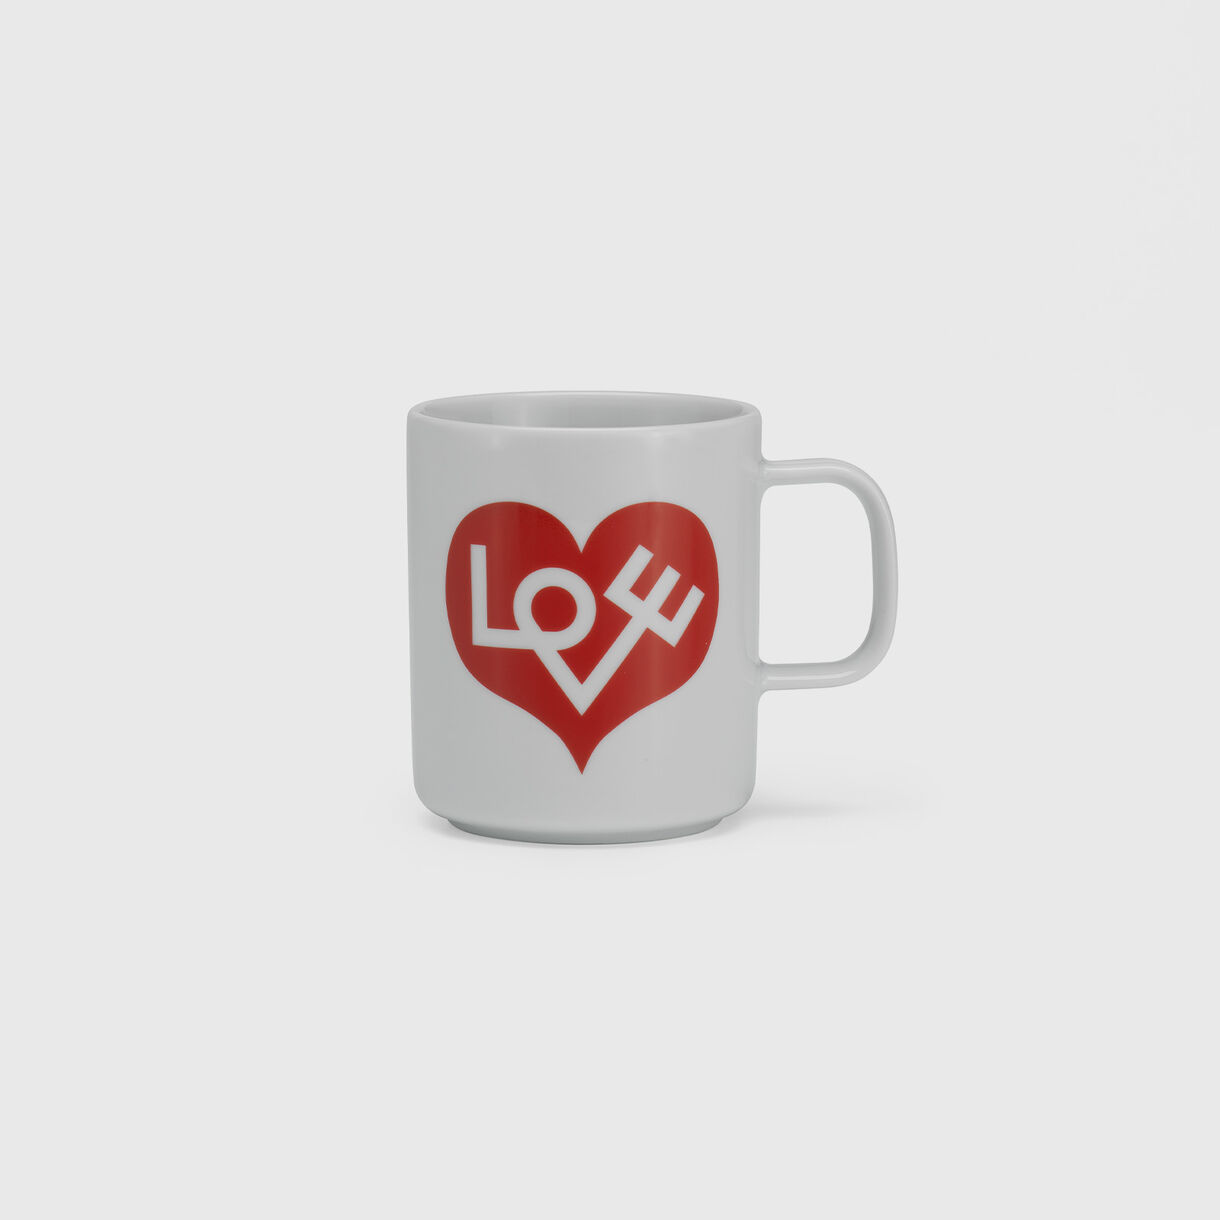 Girard Coffee Mug, Red Love Heart